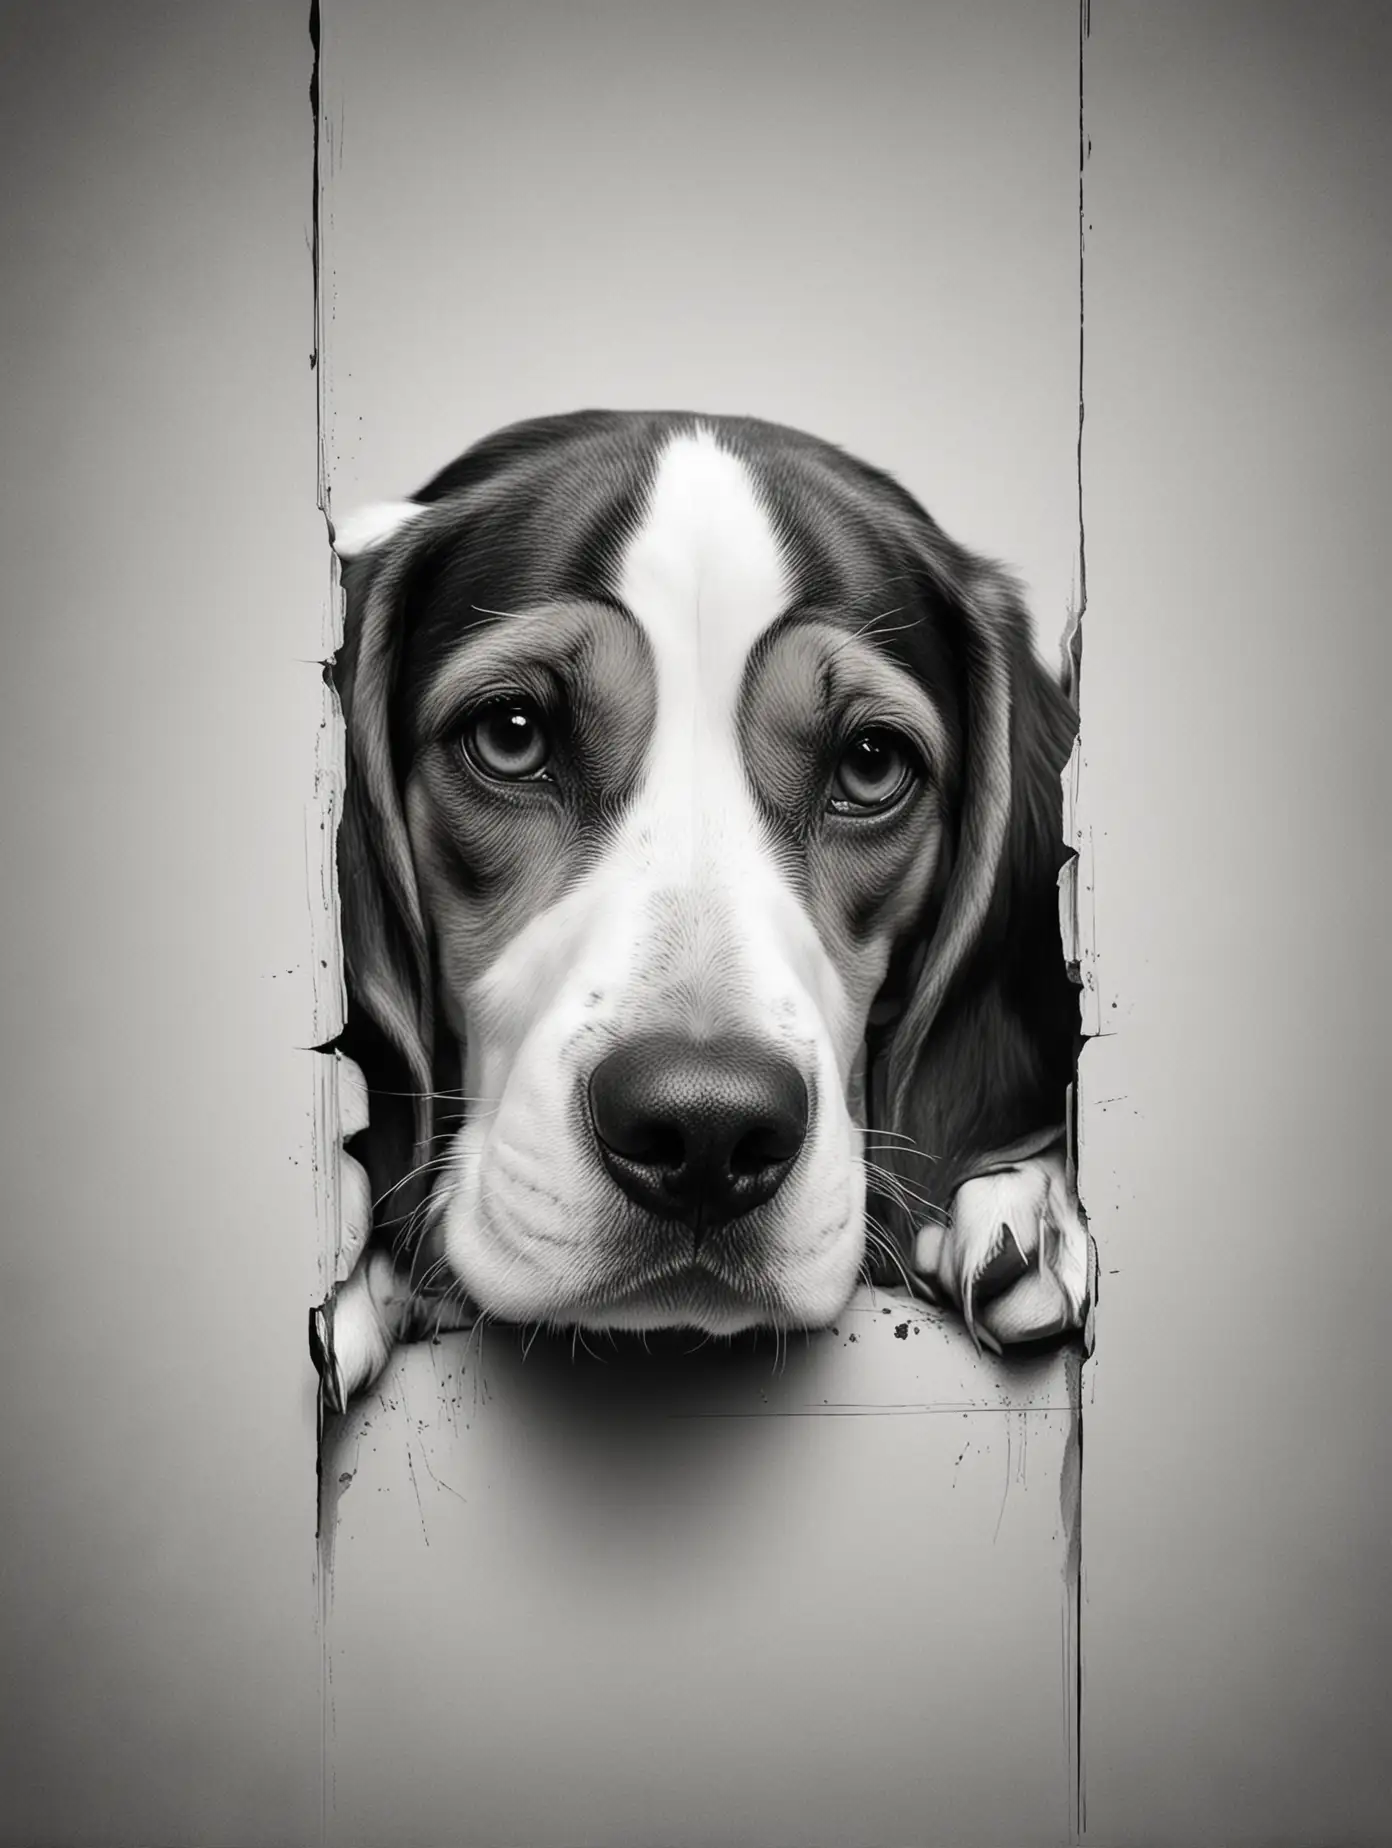 Peeking Beagle Dog Illustration Stylized Black and White Artwork of a Beagle Resting Over a Surface